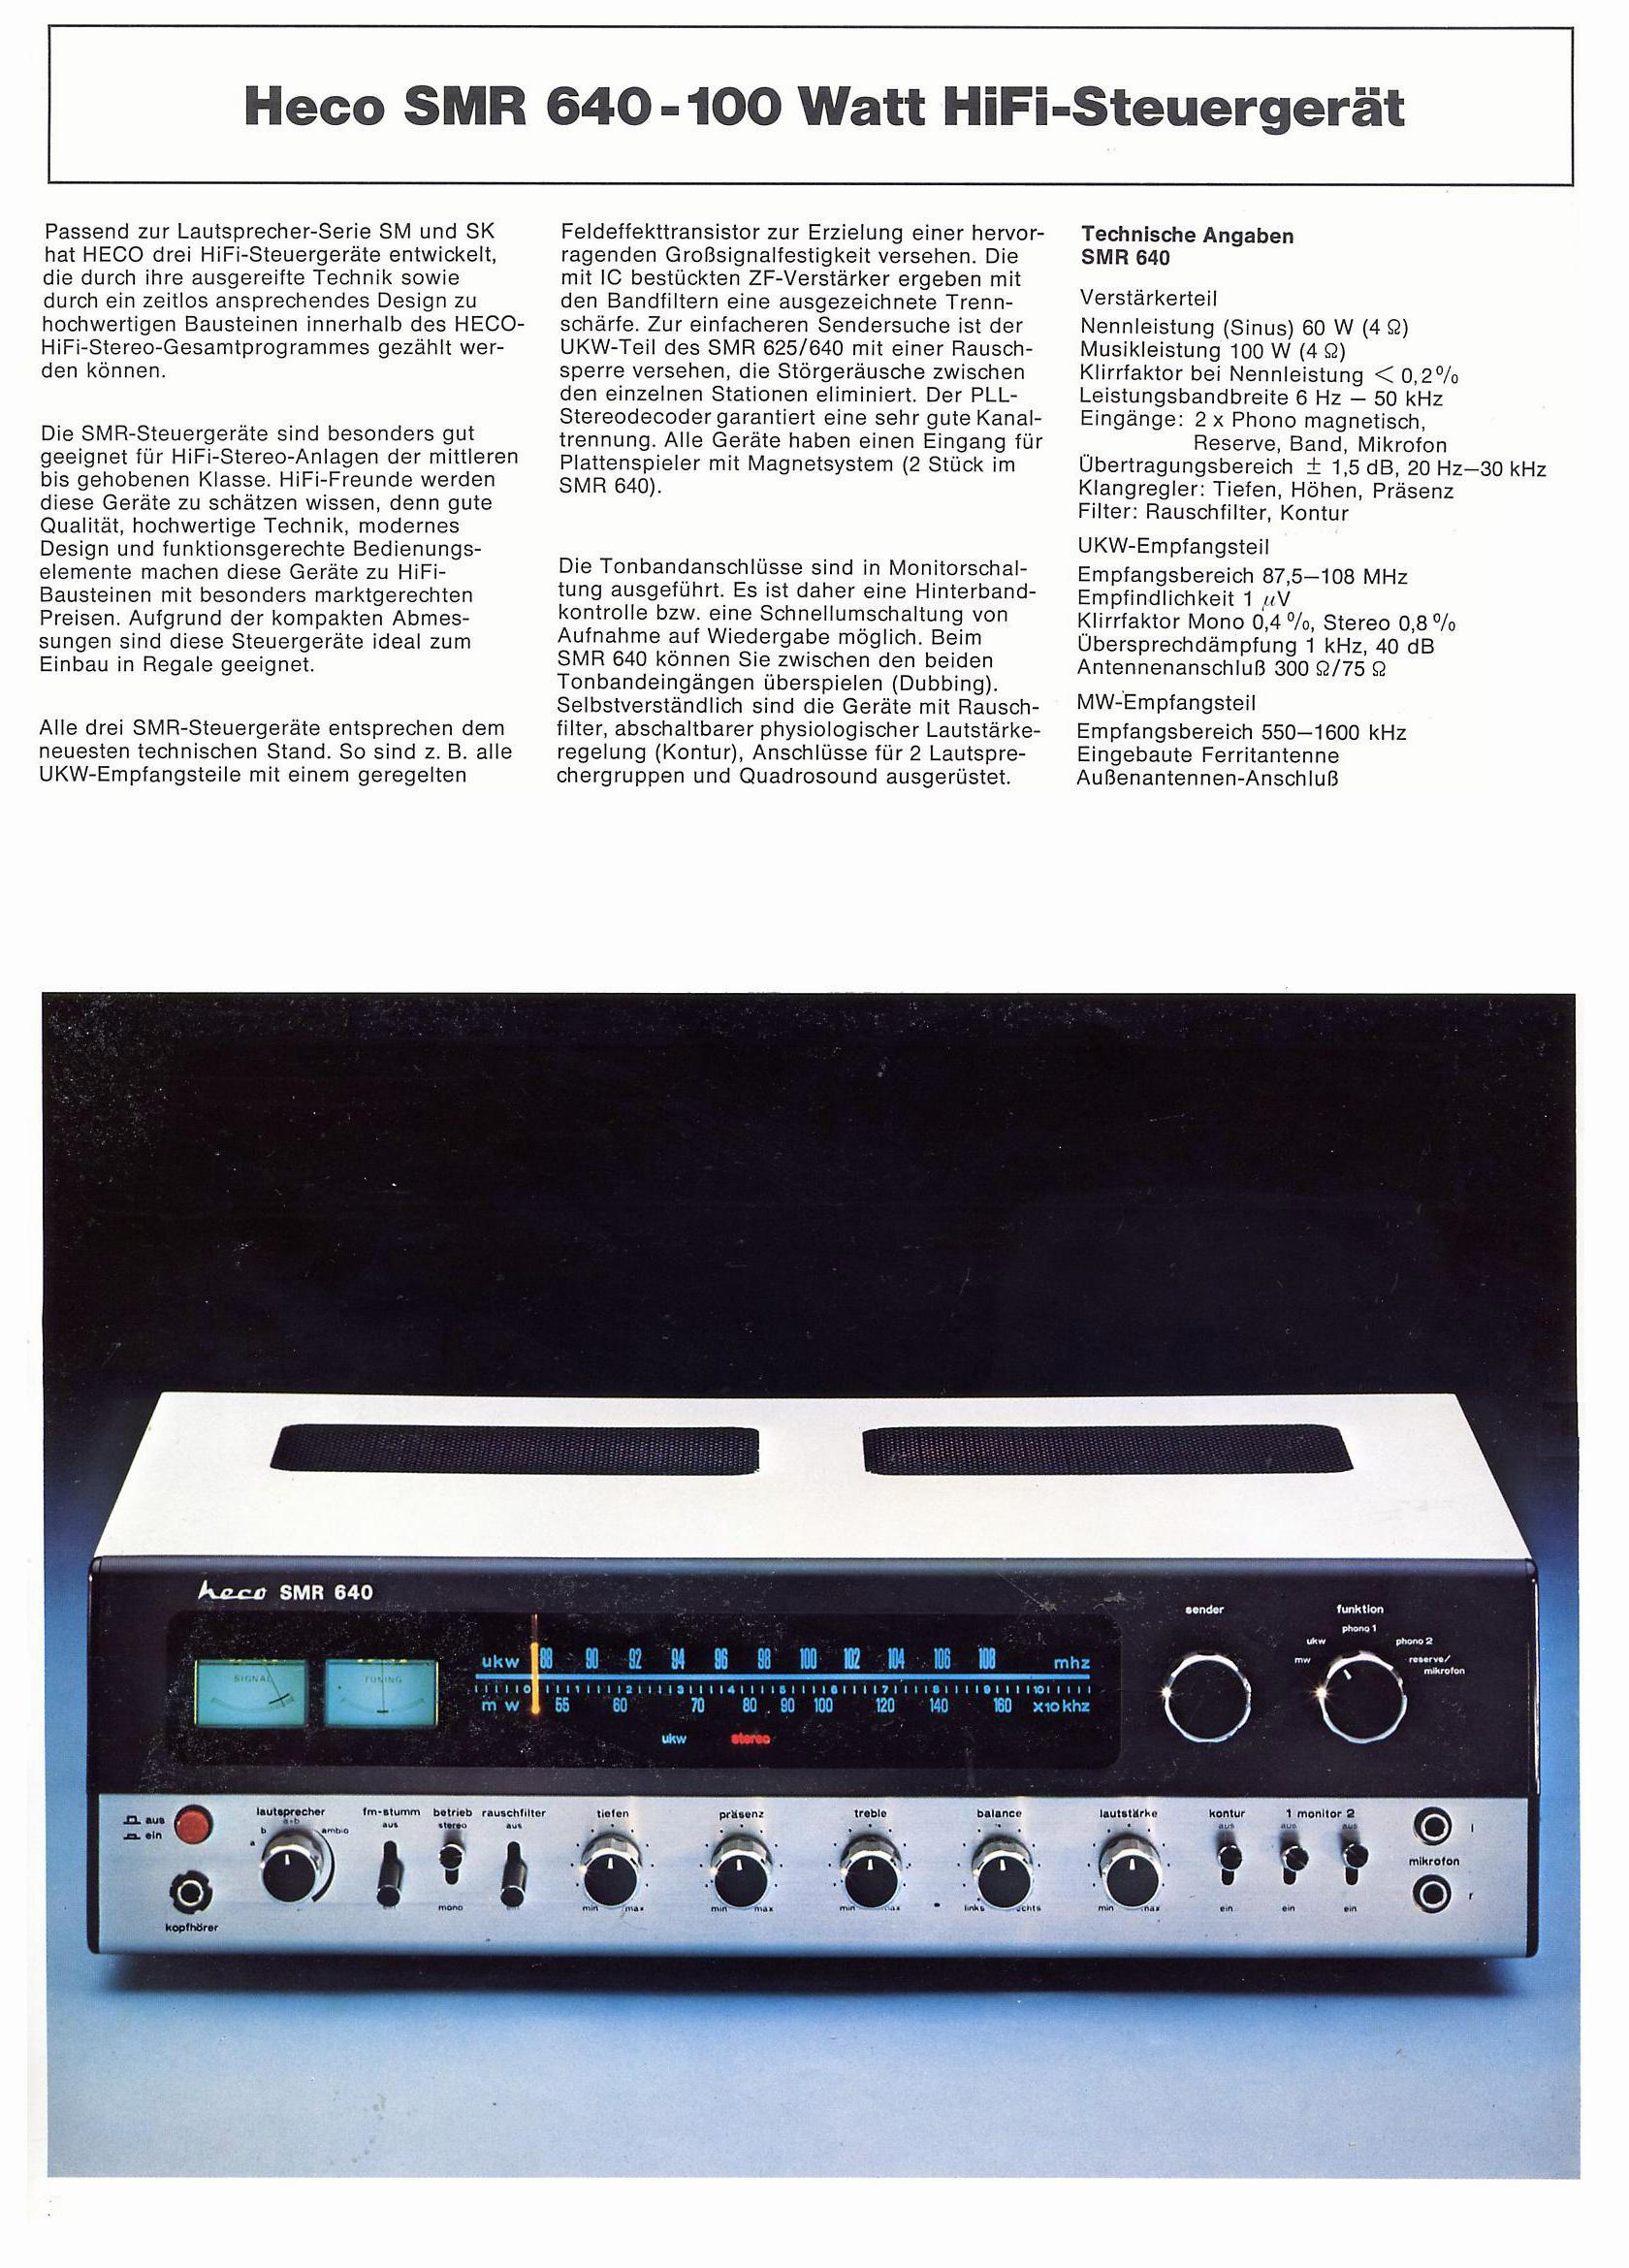 Heco SMR-640-Prospekt-1976.jpg